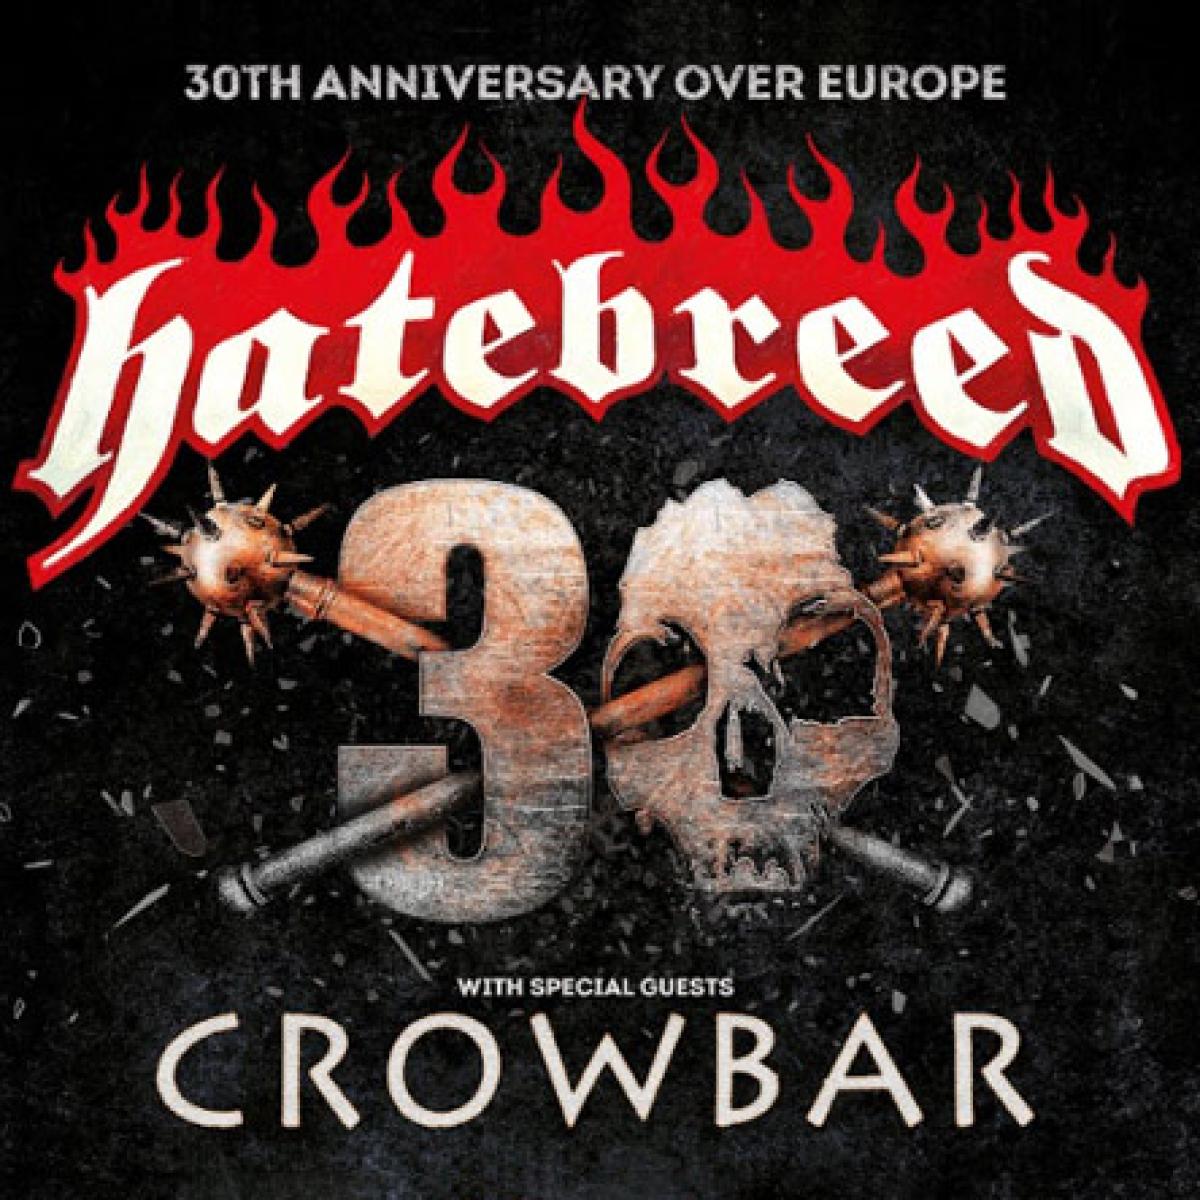 Hatebreed - Crowbar - 30th Anniversary Over Europe al Arena Wien Tickets